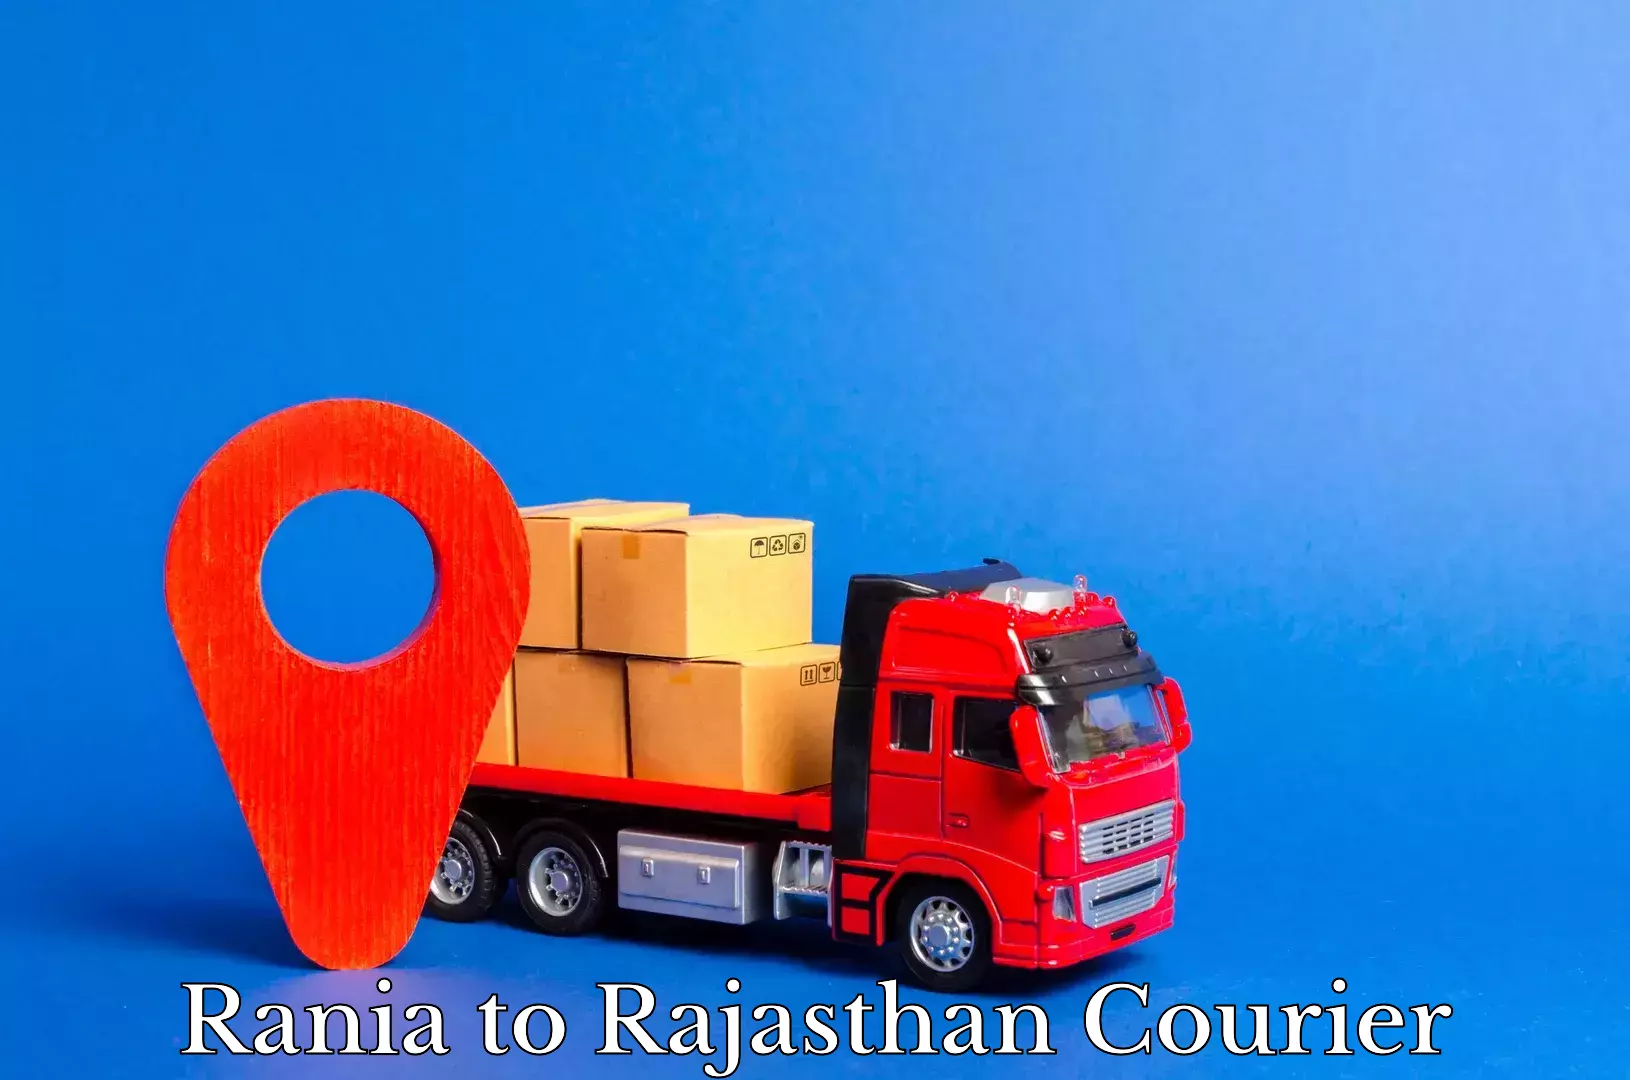 Global logistics network Rania to Rajasthan